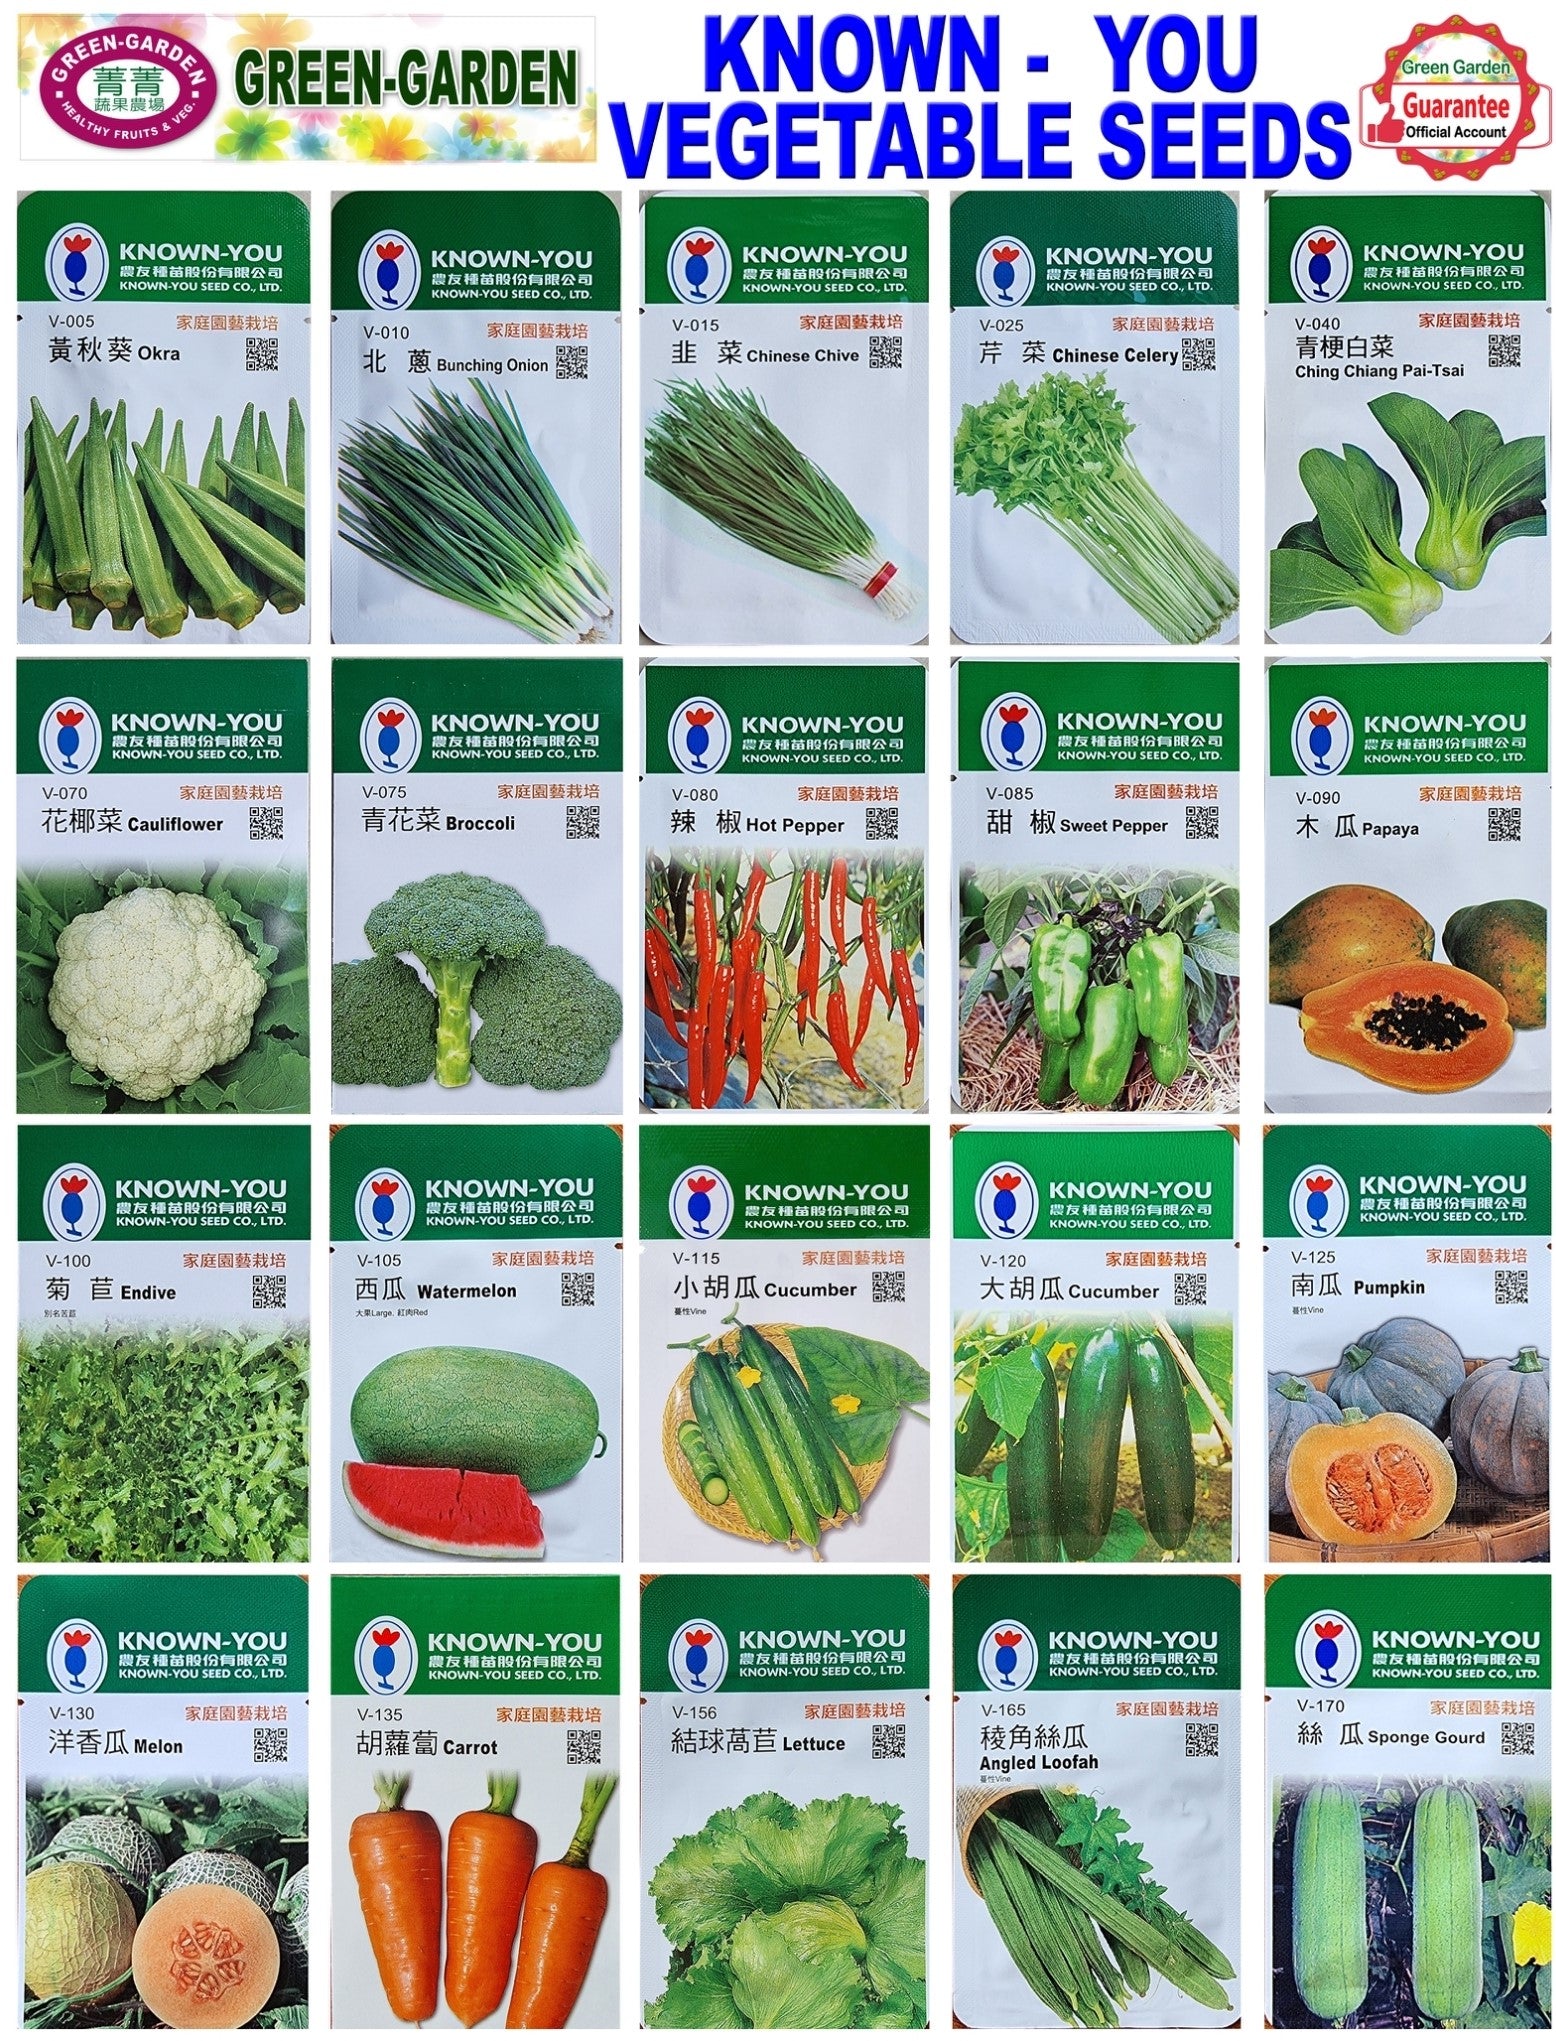 Known You Vegetable Seeds (V-130 Melon)